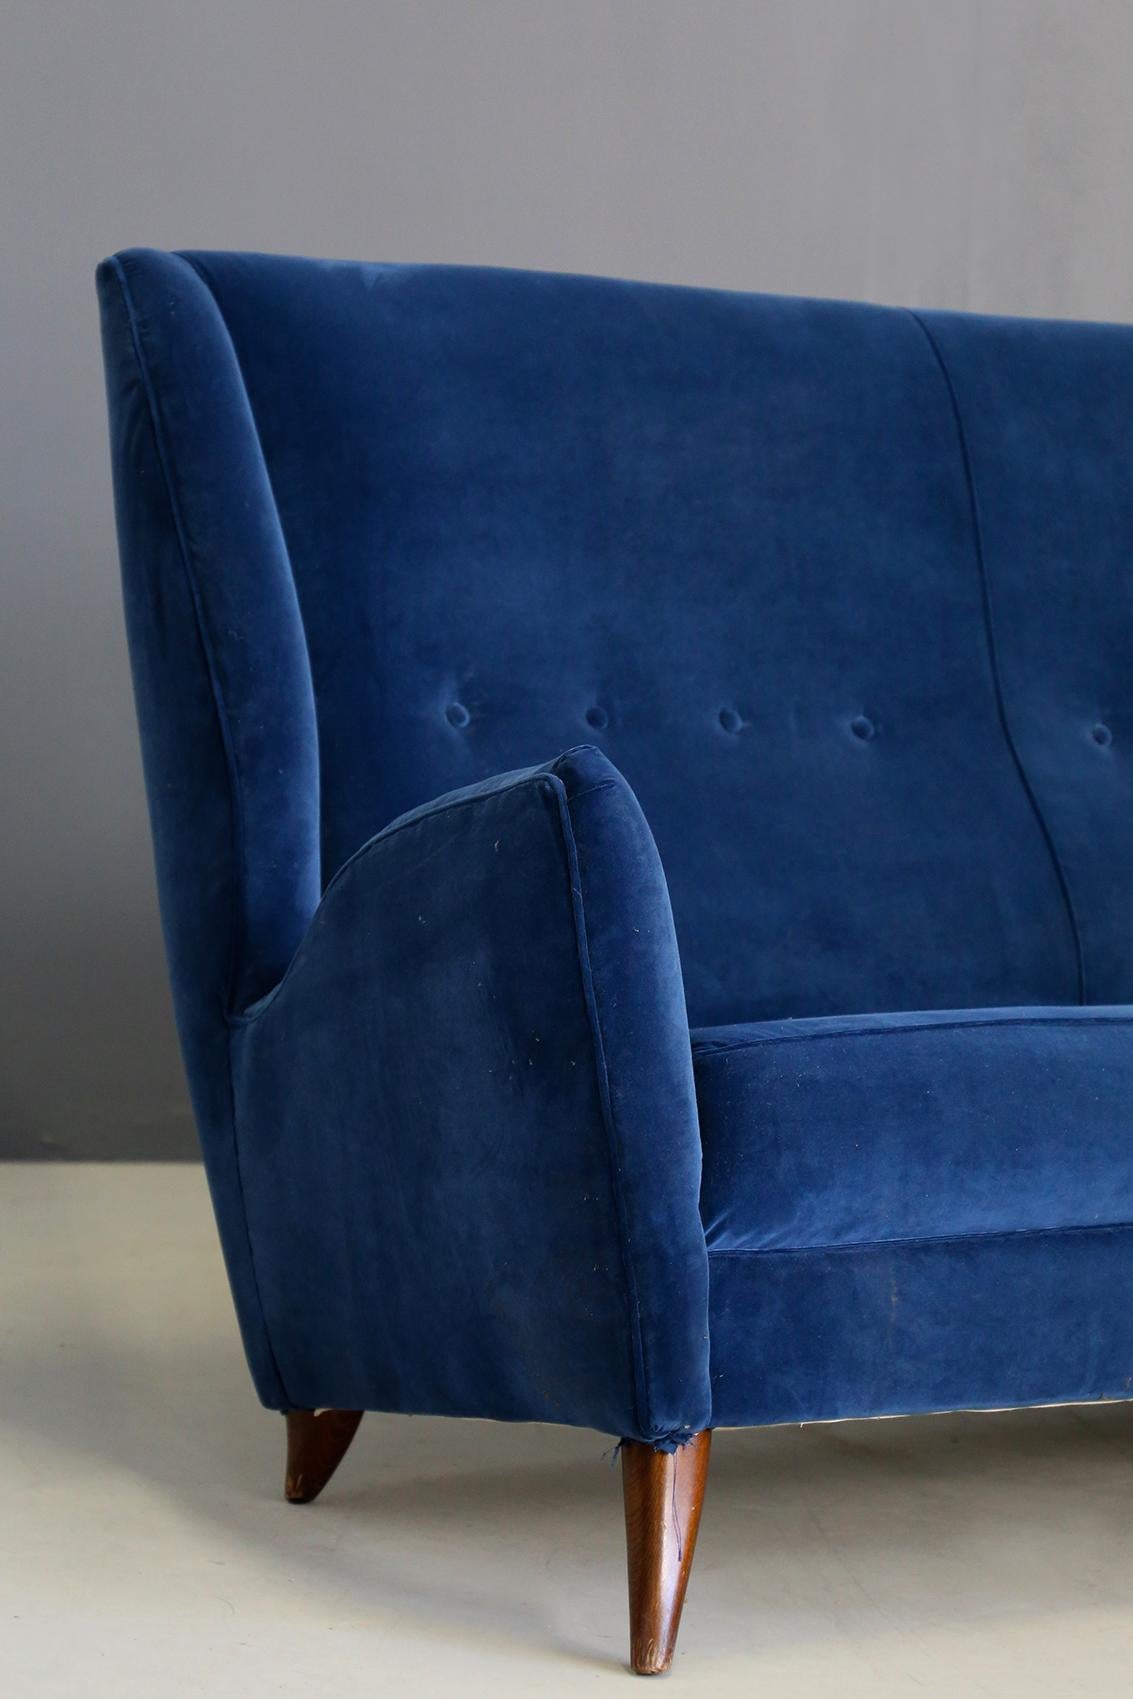 Midcentury sofa attributed to Gio Ponti for Isa Bergamo in blue velvet, restored 1950s. Elegant and timeless, this sofa is attributed to Gio Ponti for Isa Bergamo manufacture in 1950s. The sofa has been restored in blue velvet. The seat includes 4